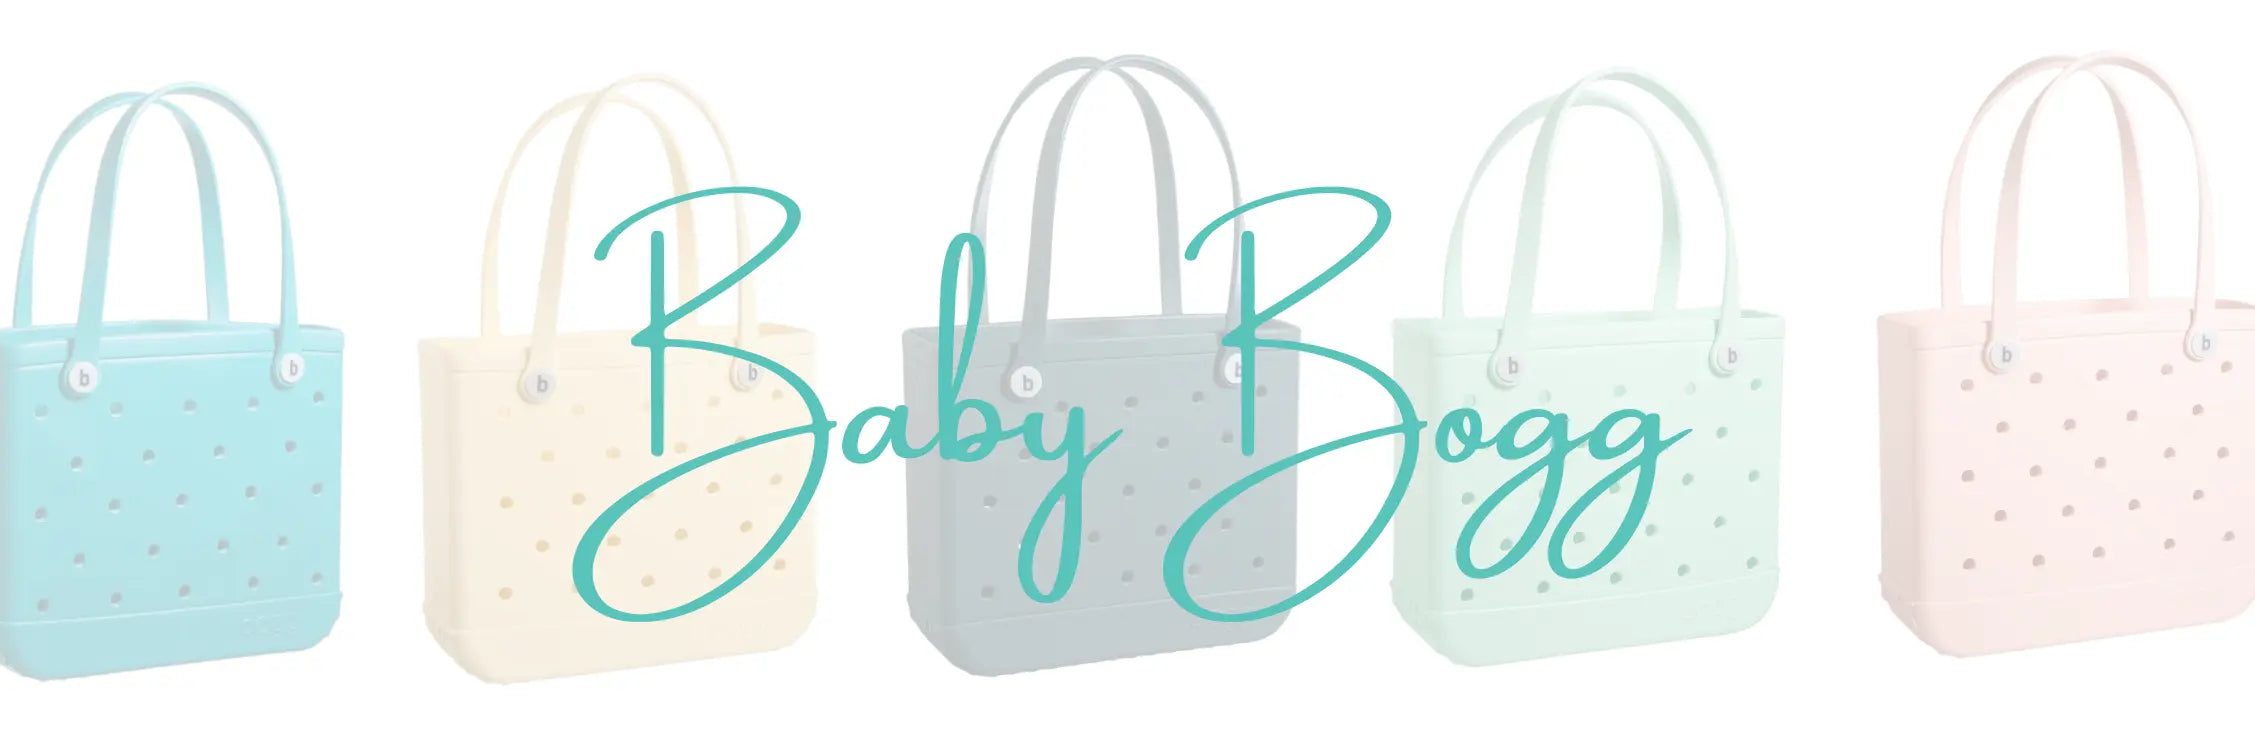 Shop Baby Bogg® Bags.